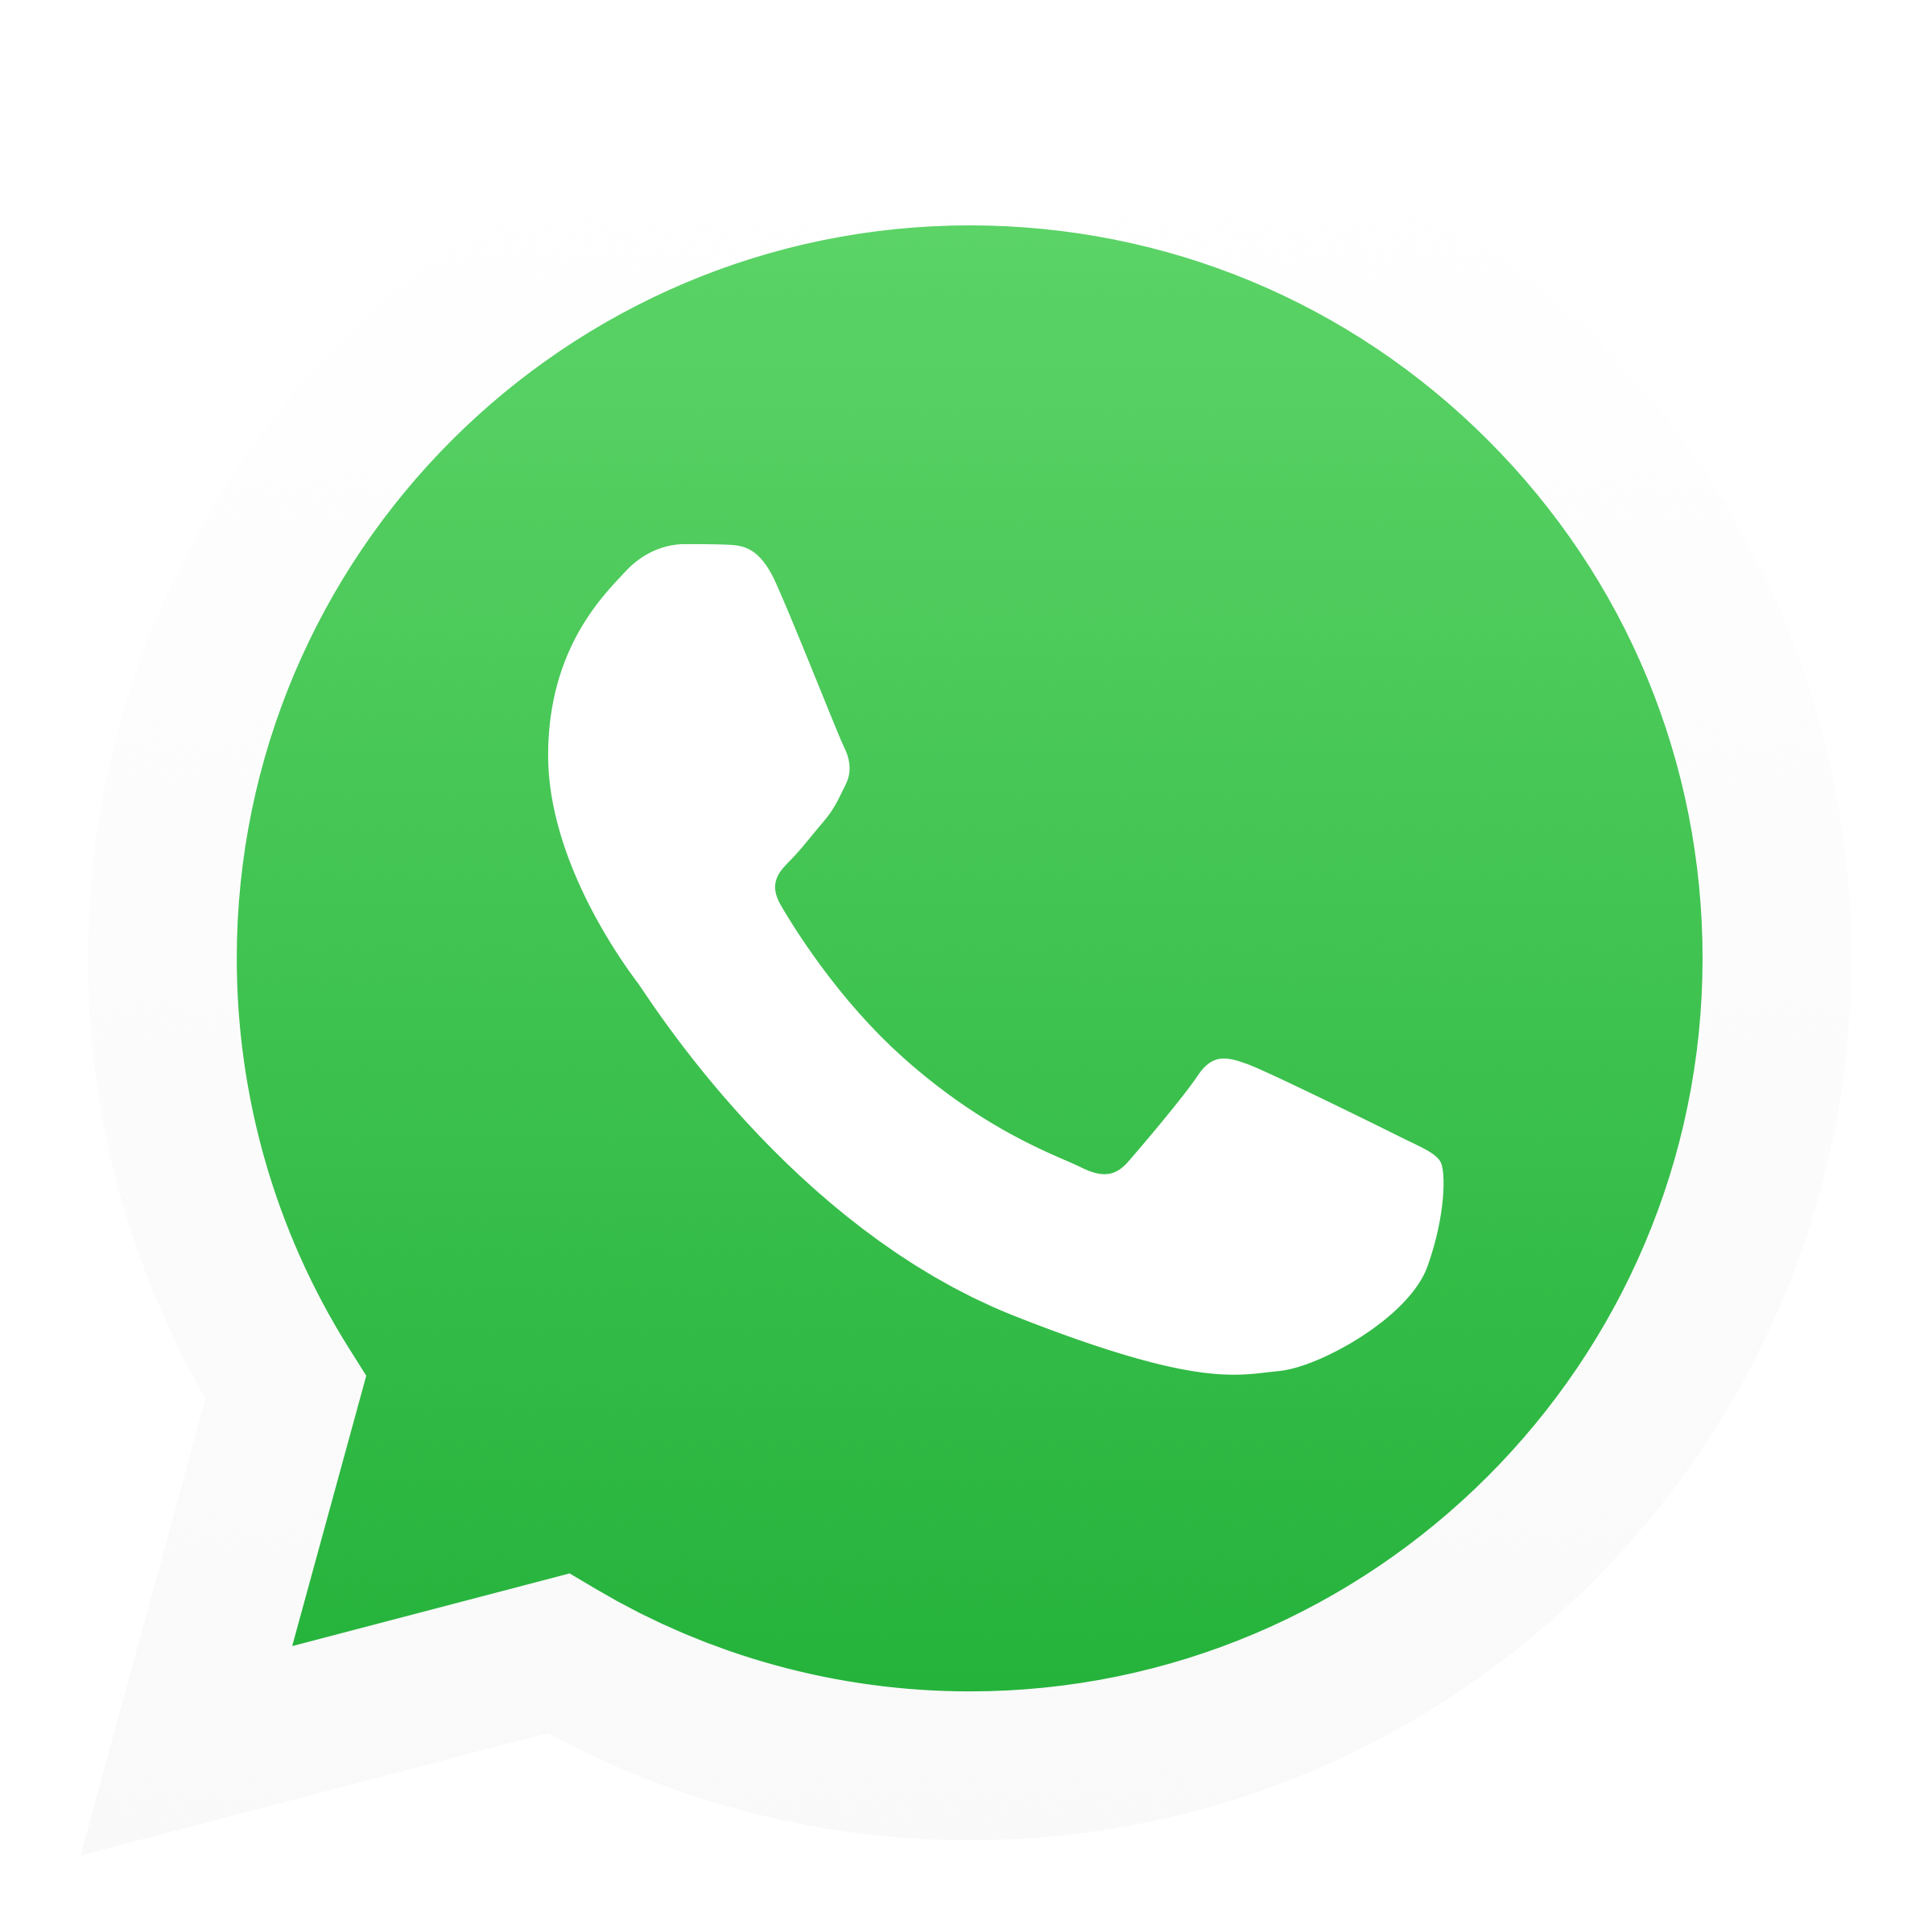 Logo Whatsapp Png / File:WhatsApp logo-color-vertical.svg - Wikimedia